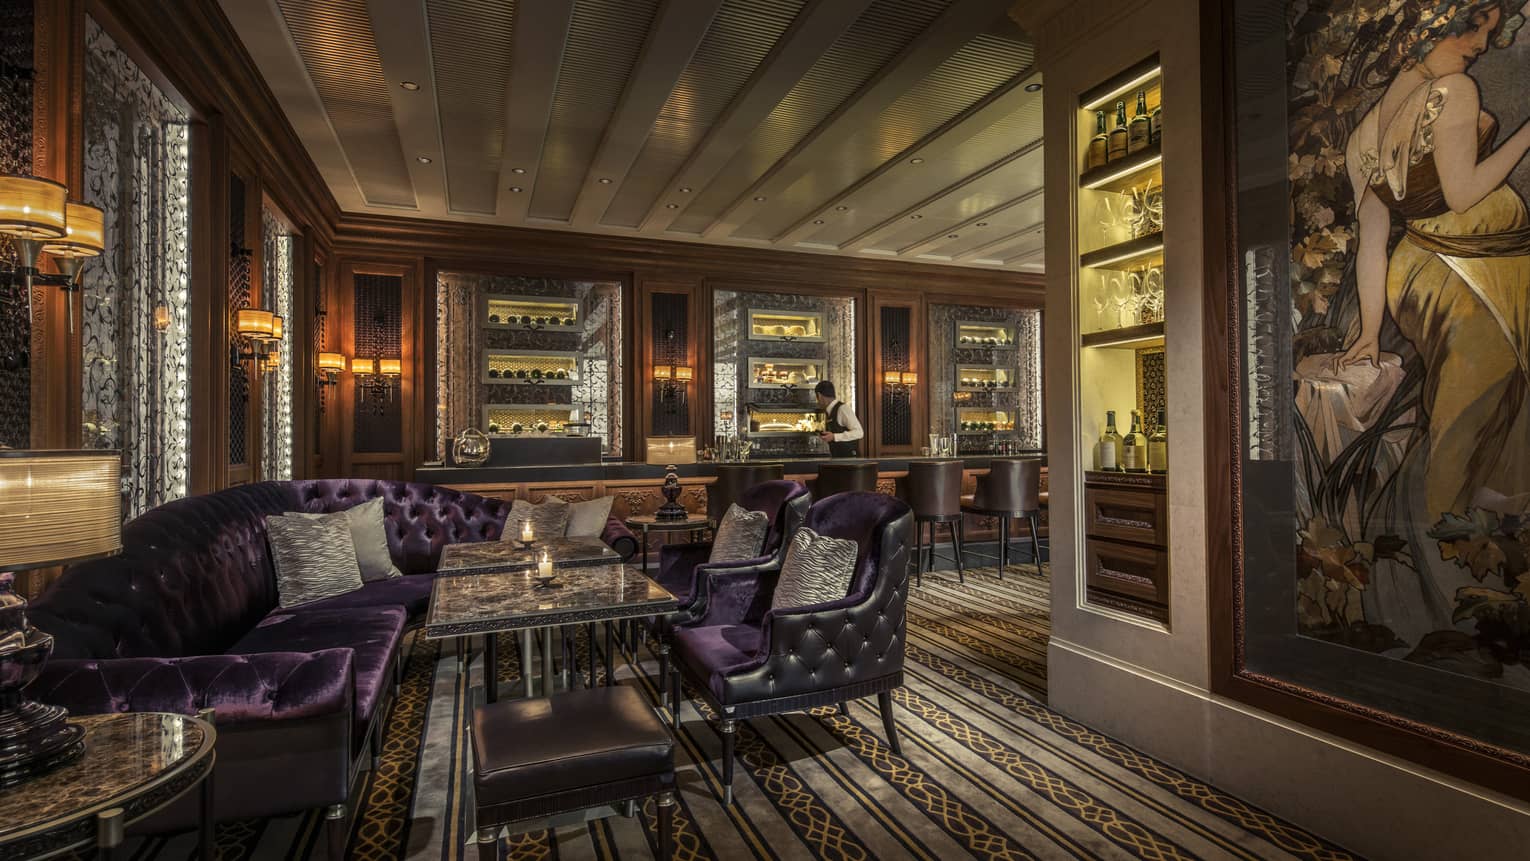 Dimly-lit Caprice Bar lounge with velvet purple sofas, leather armchairs, liquor on shelves with light